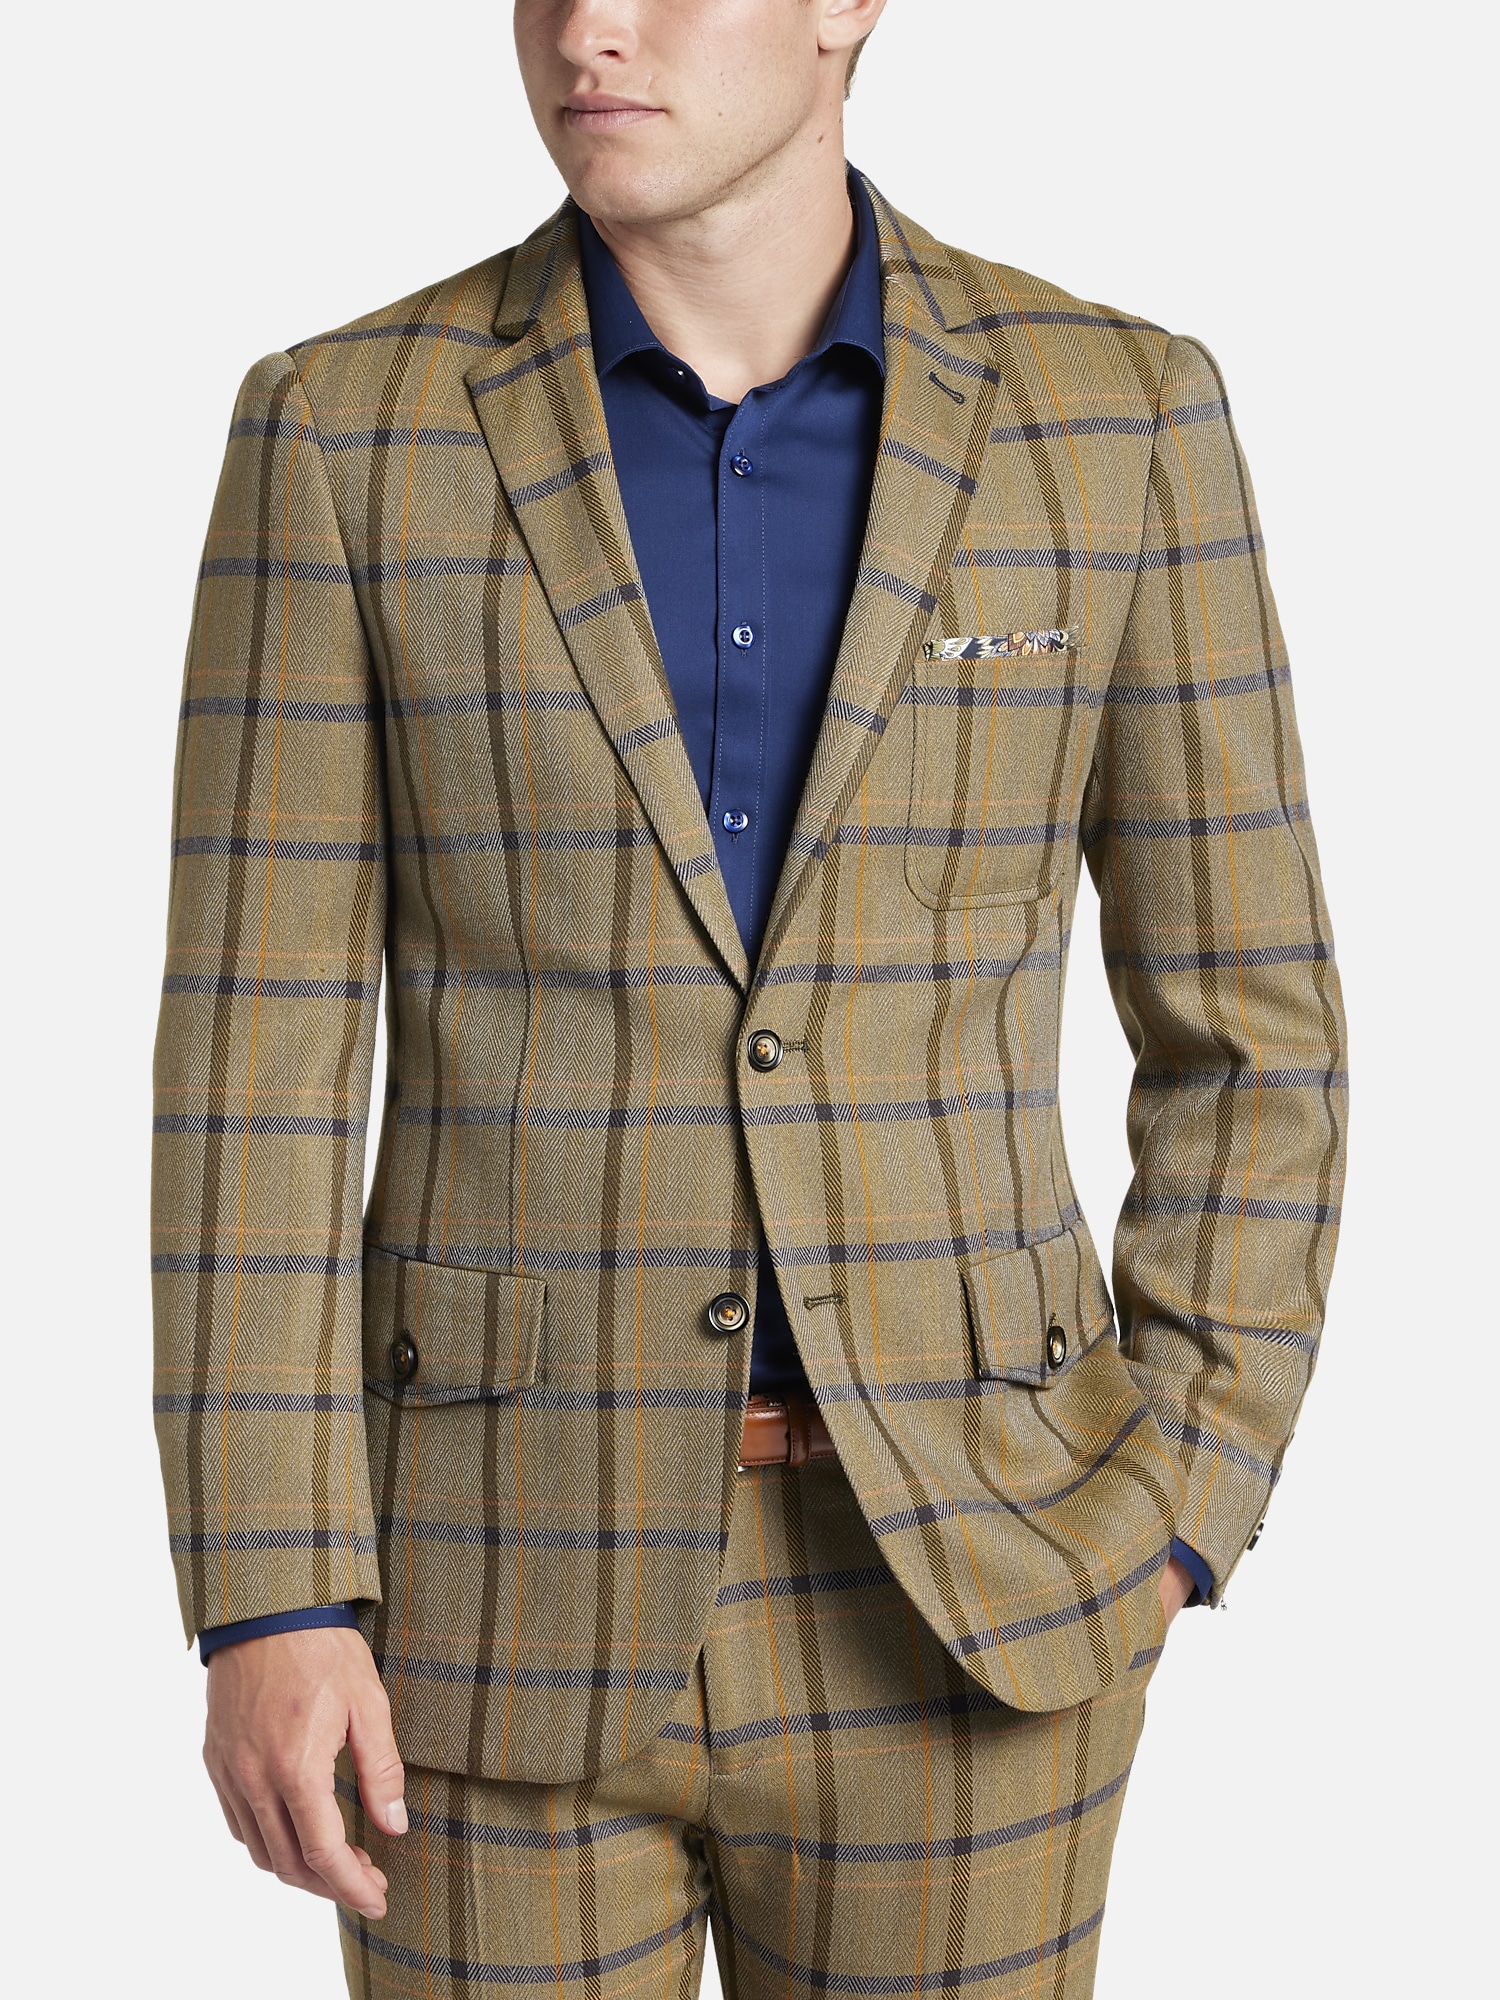 Paisley & Gray Slim Fit Herringbone Plaid Suit Separates Men's Jackets